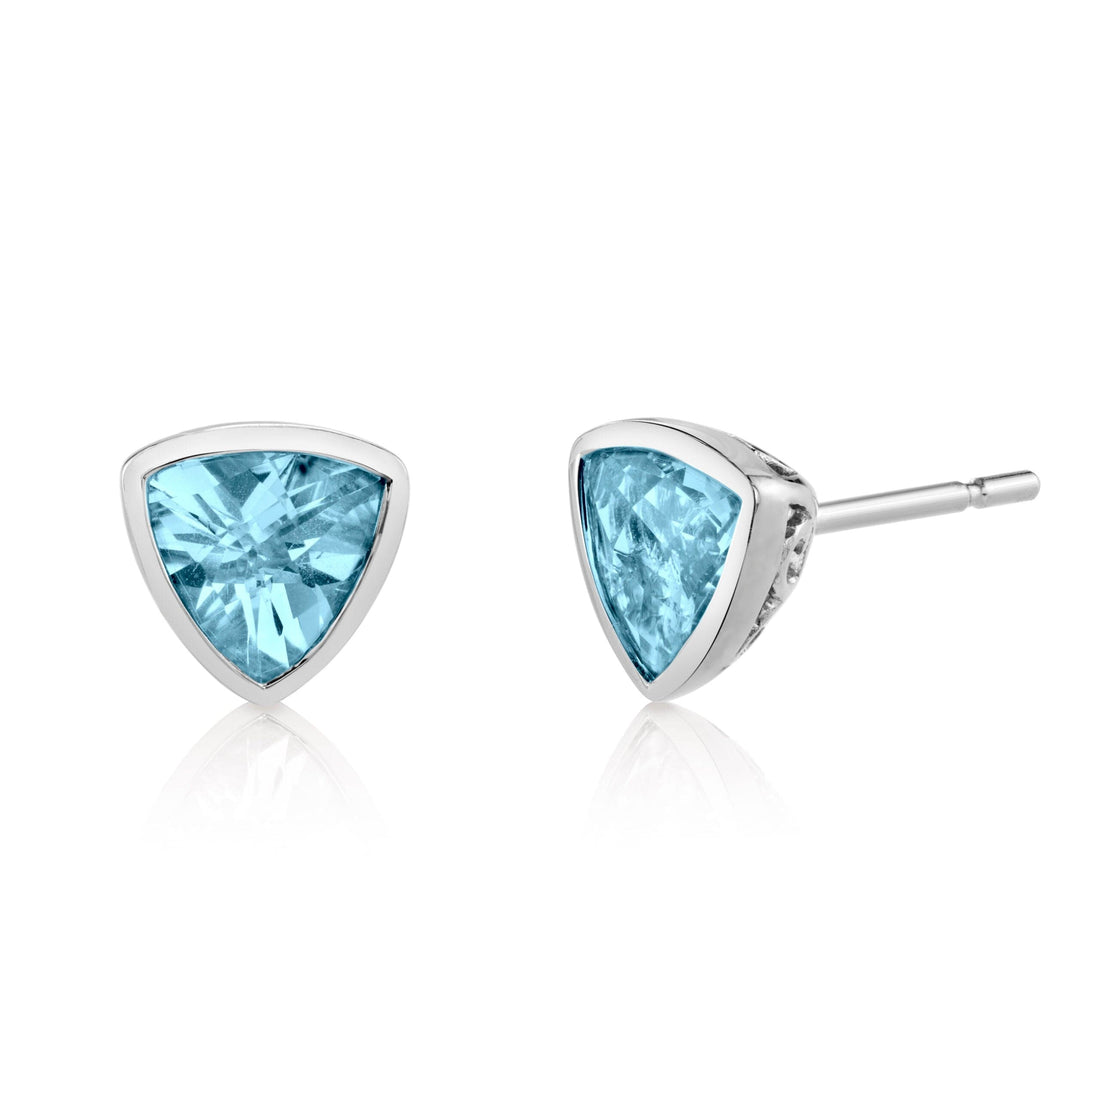 Stanton Color Trillian Aquamarine Stud Earrings - Skeie's Jewelers